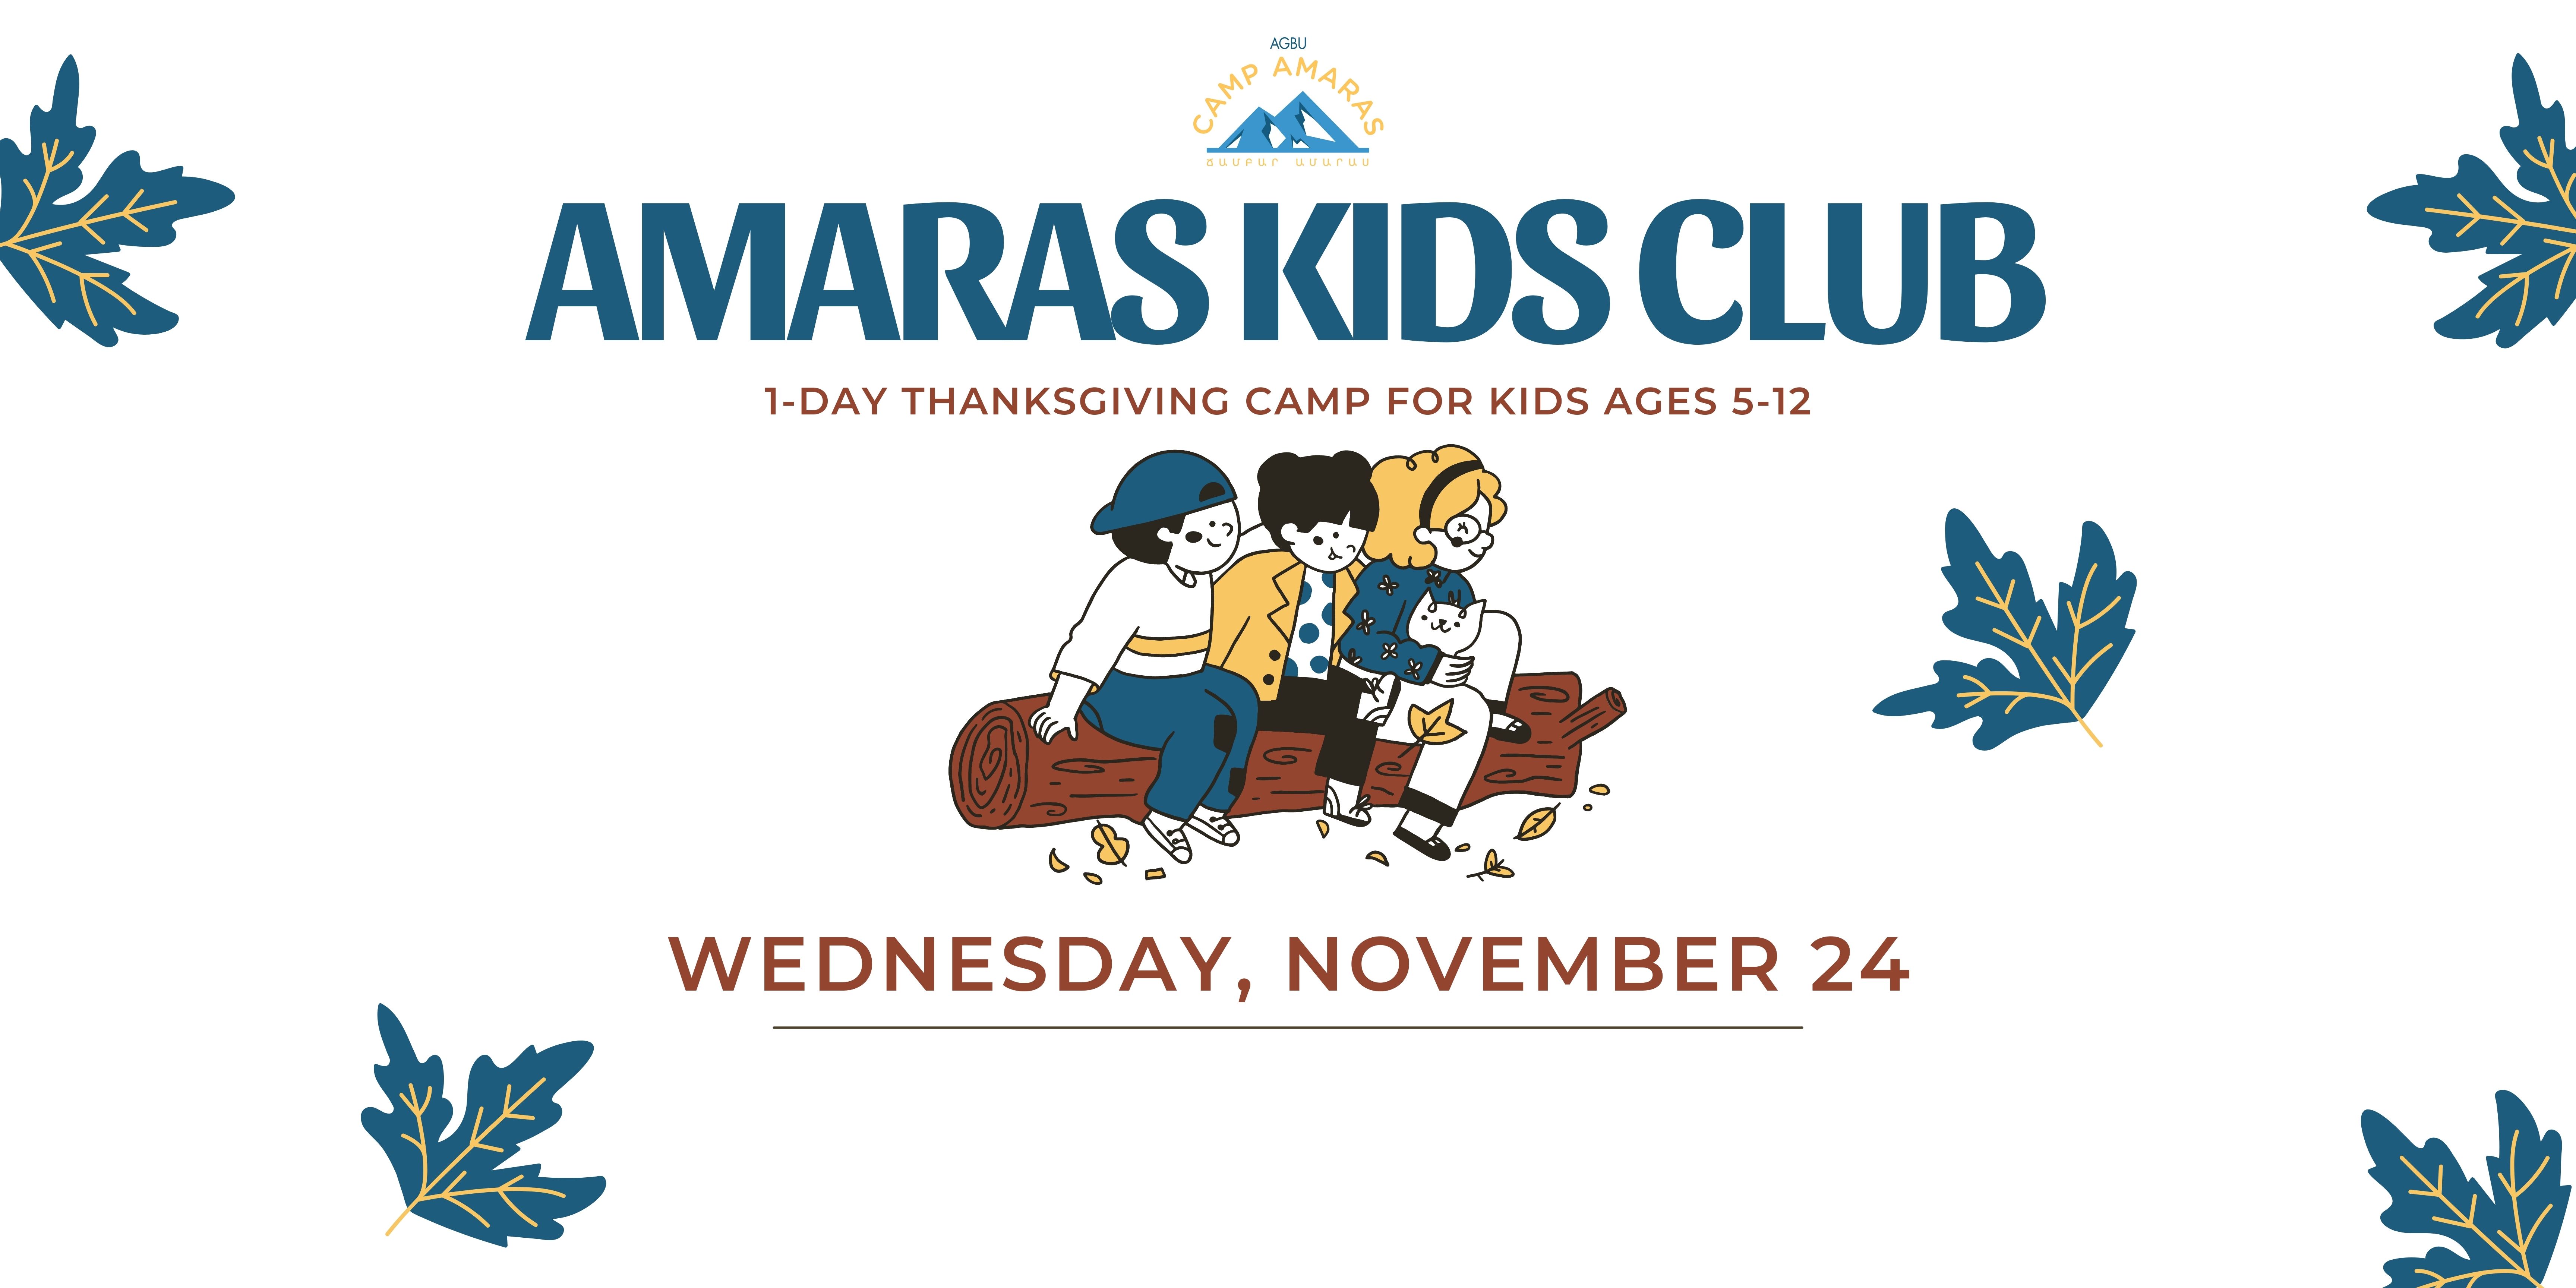 Amaras Kids Club: 1-Day Thanksgiving Camp